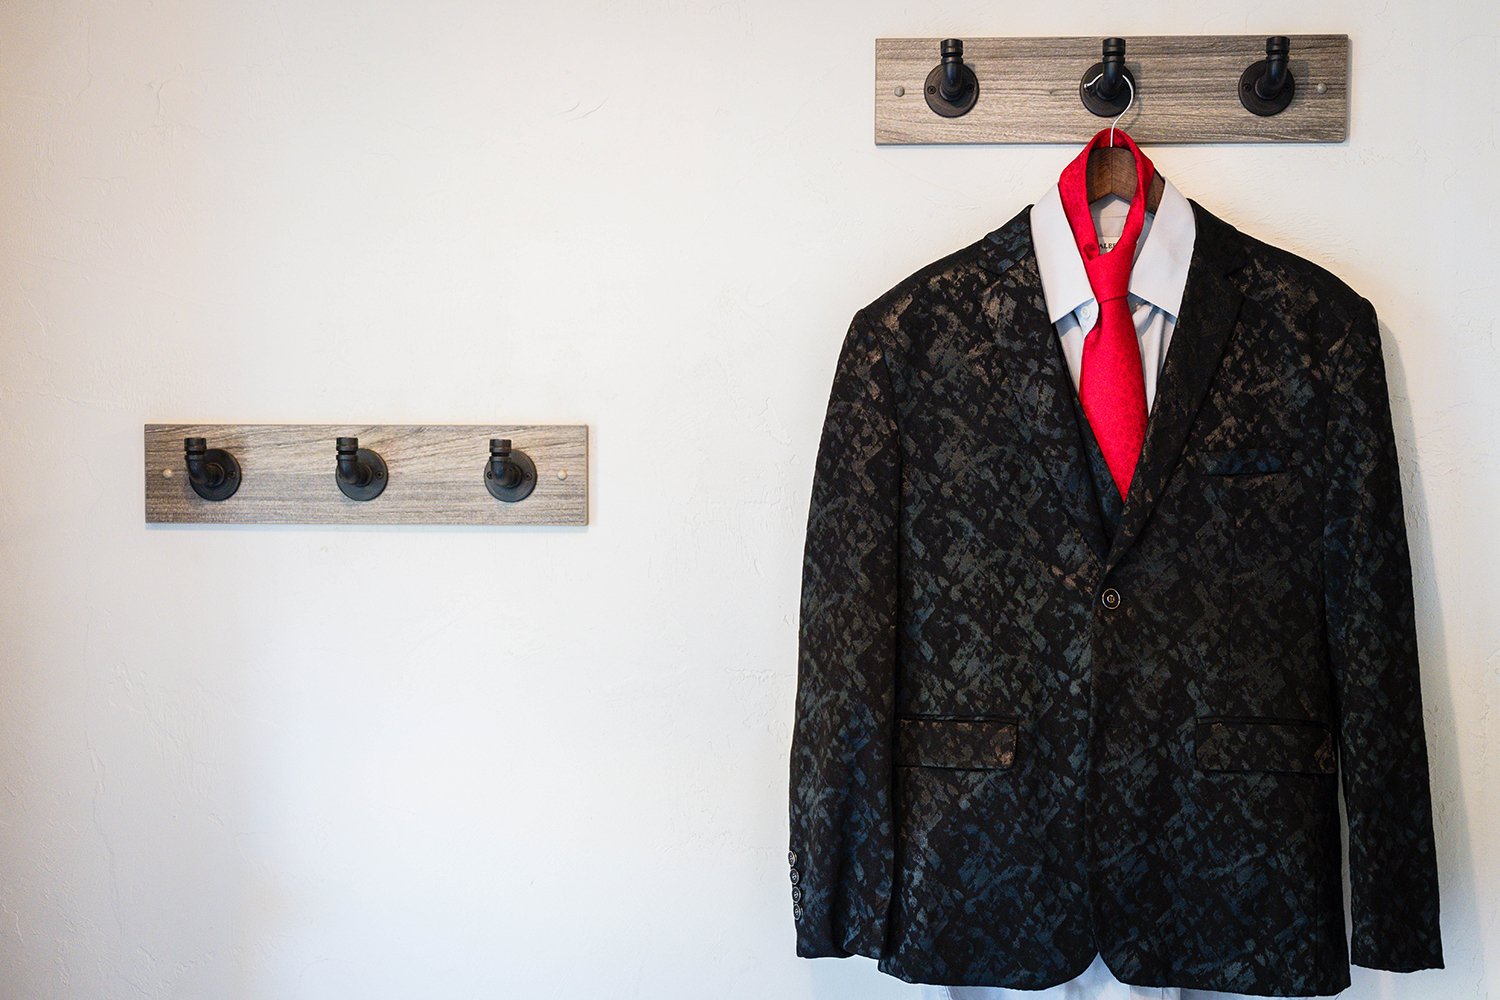 A suit jacket, suit vest, dress shirt, and tie hang on a wooden hanger on a coat rack.